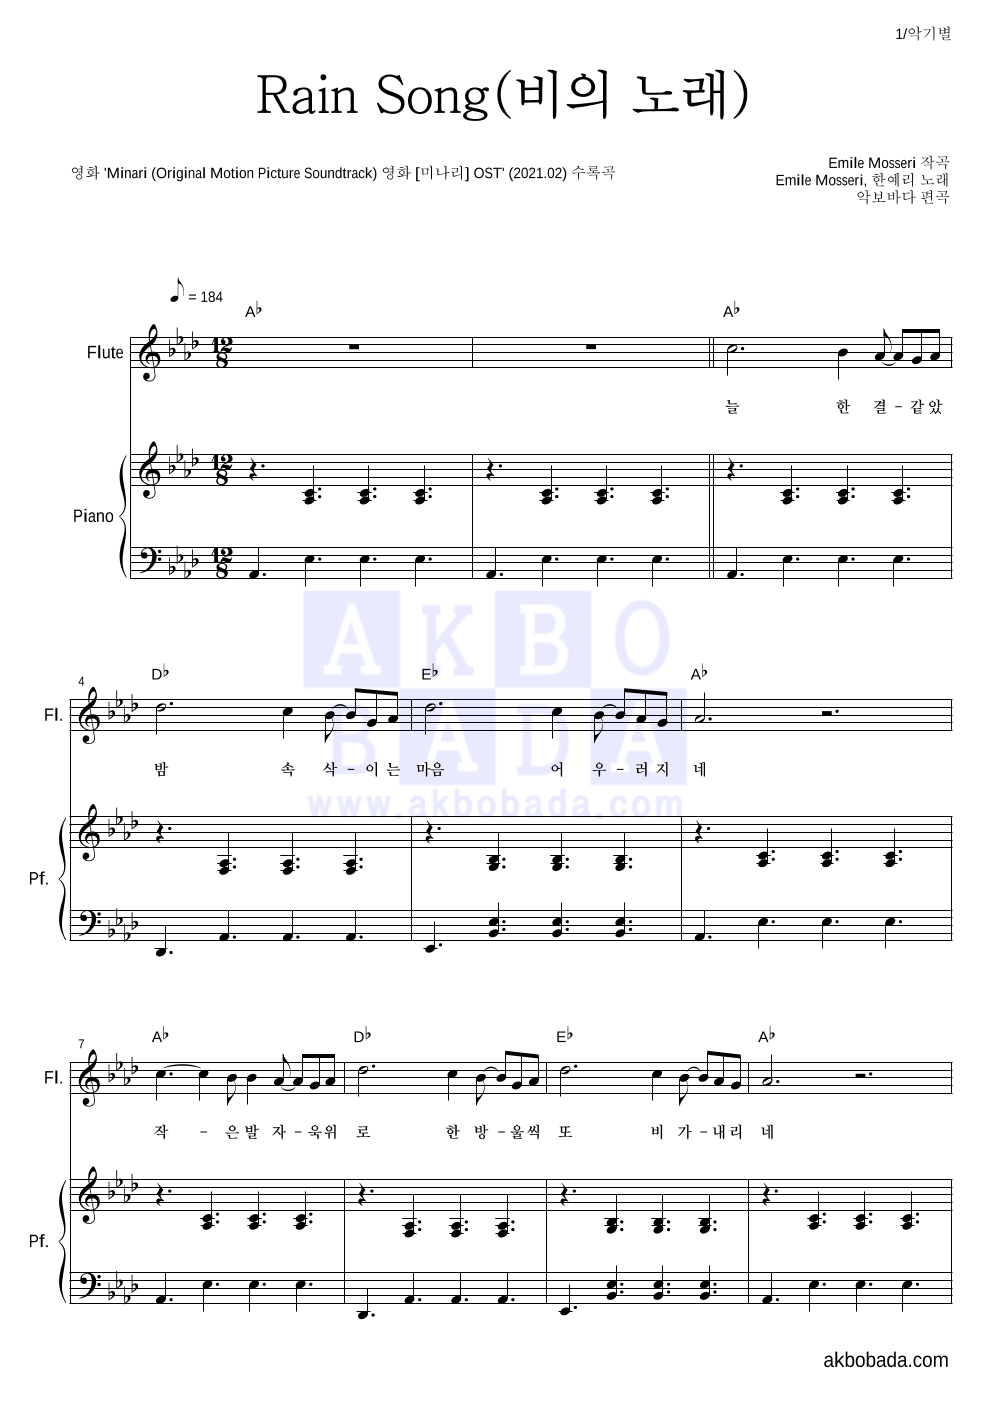 Emile Mosseri,한예리 - Rain Song(비의 노래) 플룻&피아노 악보 